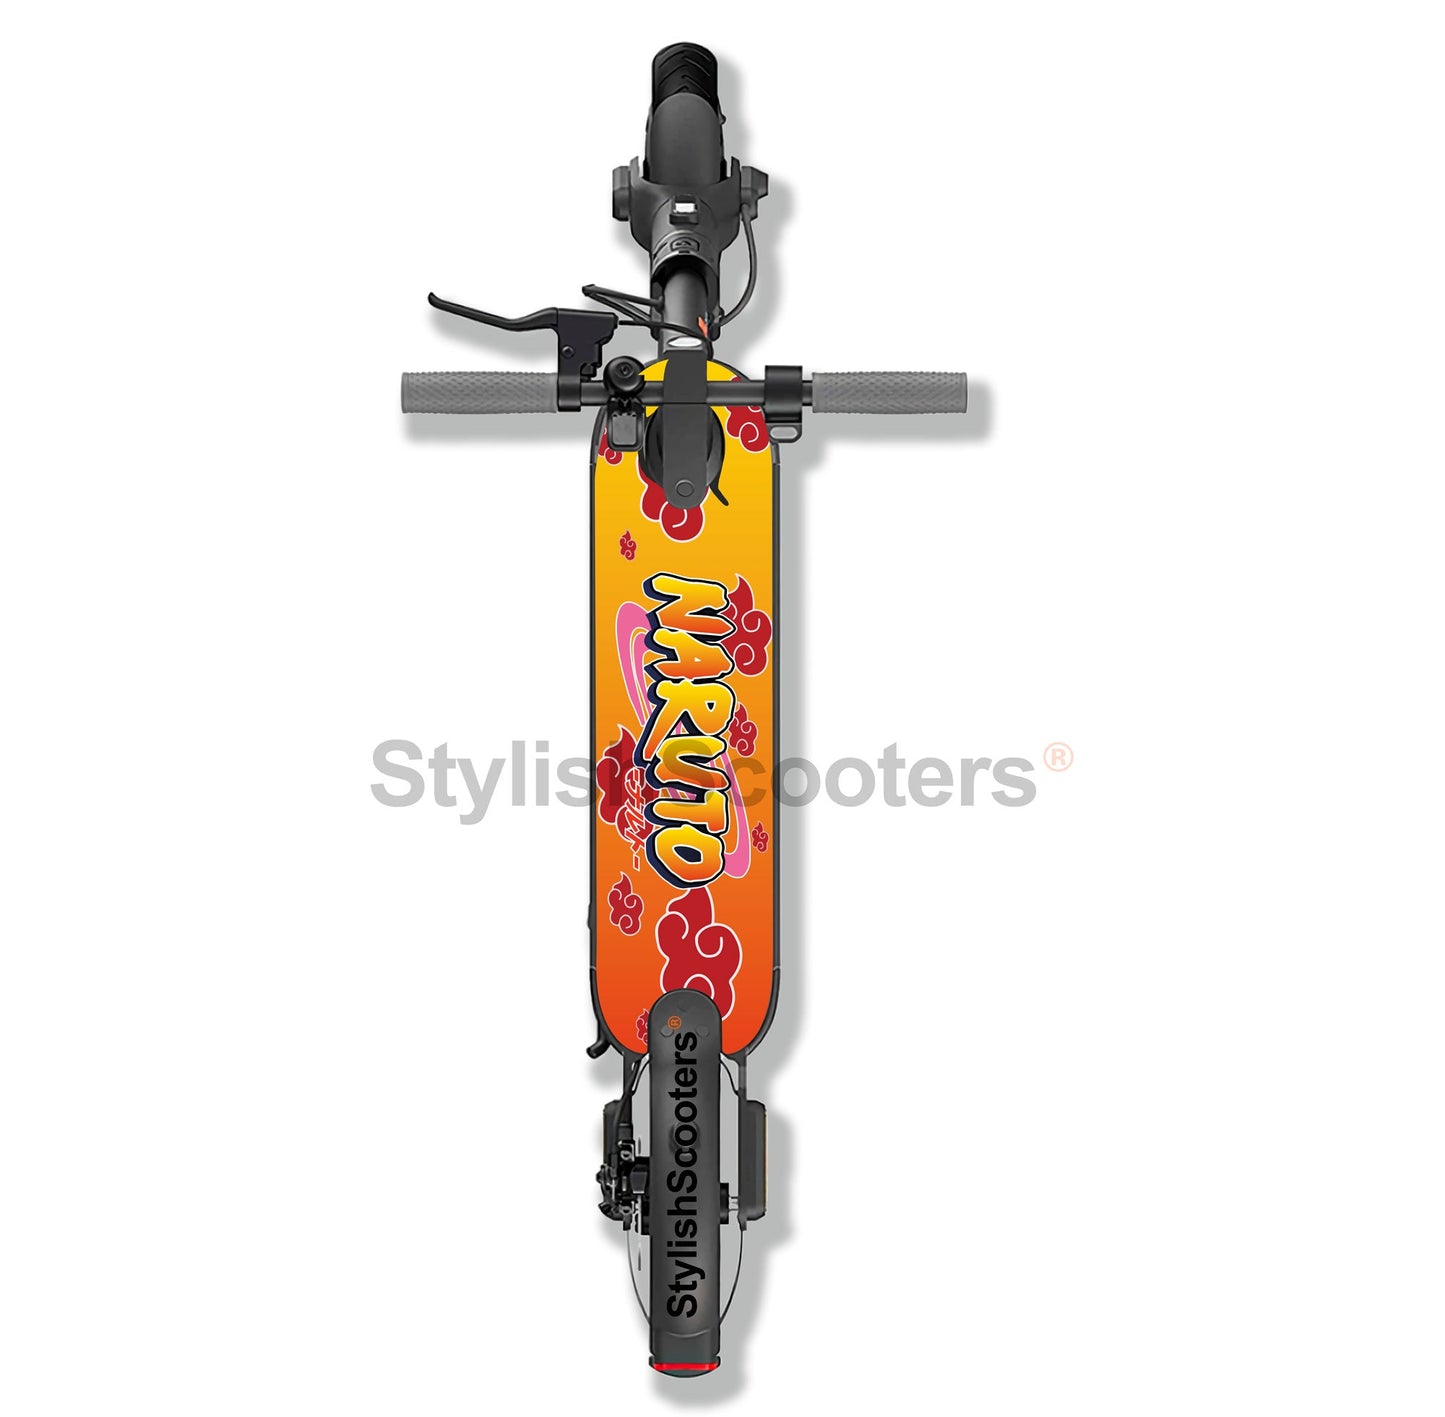 Stylish Scooters | Vinilo para Xiaomi m365 Naruto - Stylish Scooters